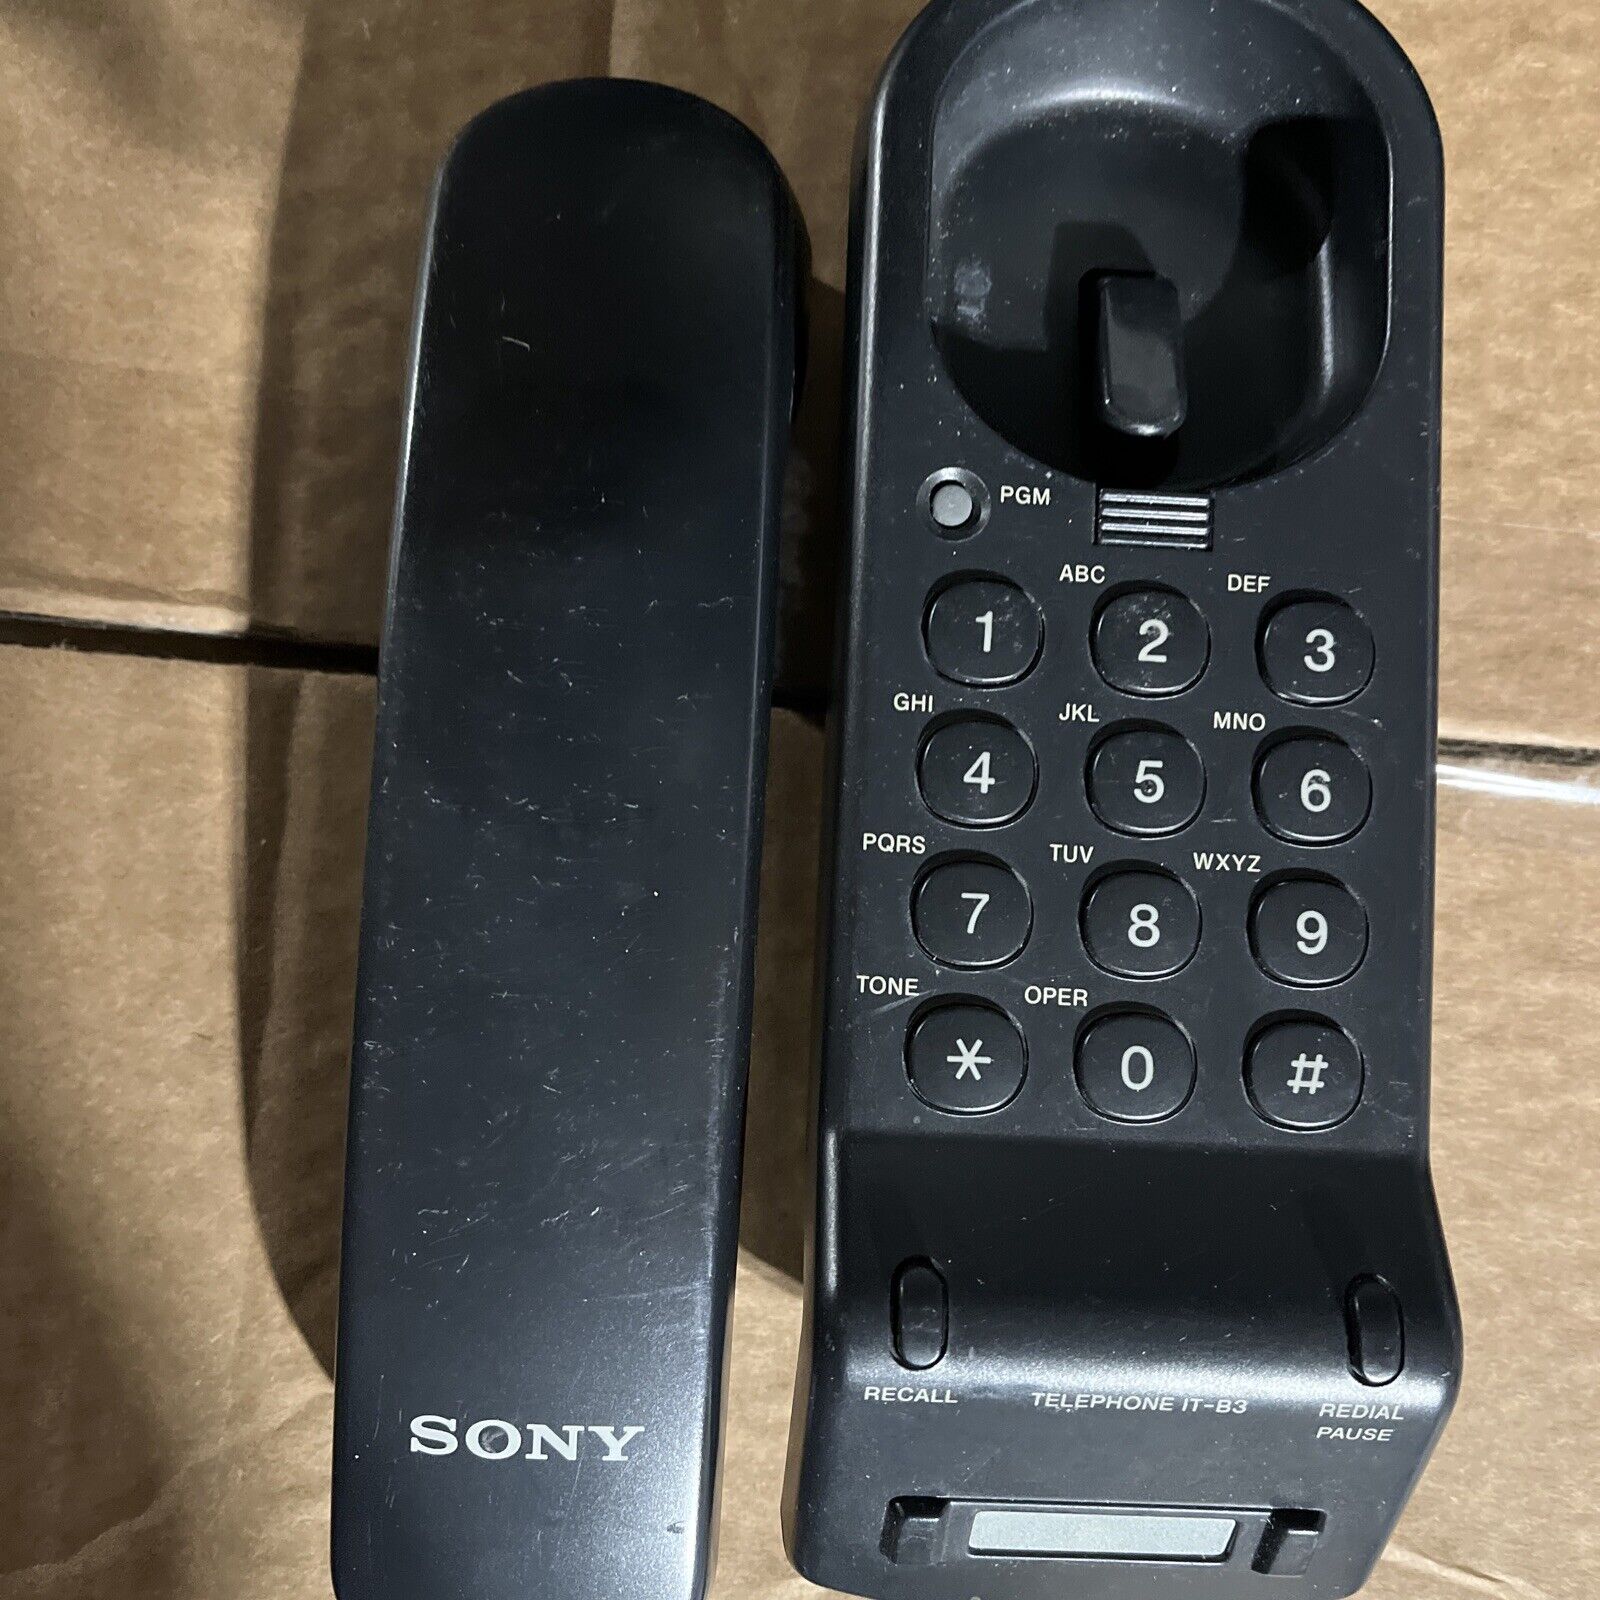 Vintage 90s Sony Landline Corded Black Telephone  Model: IT-B3 - Tested & Works